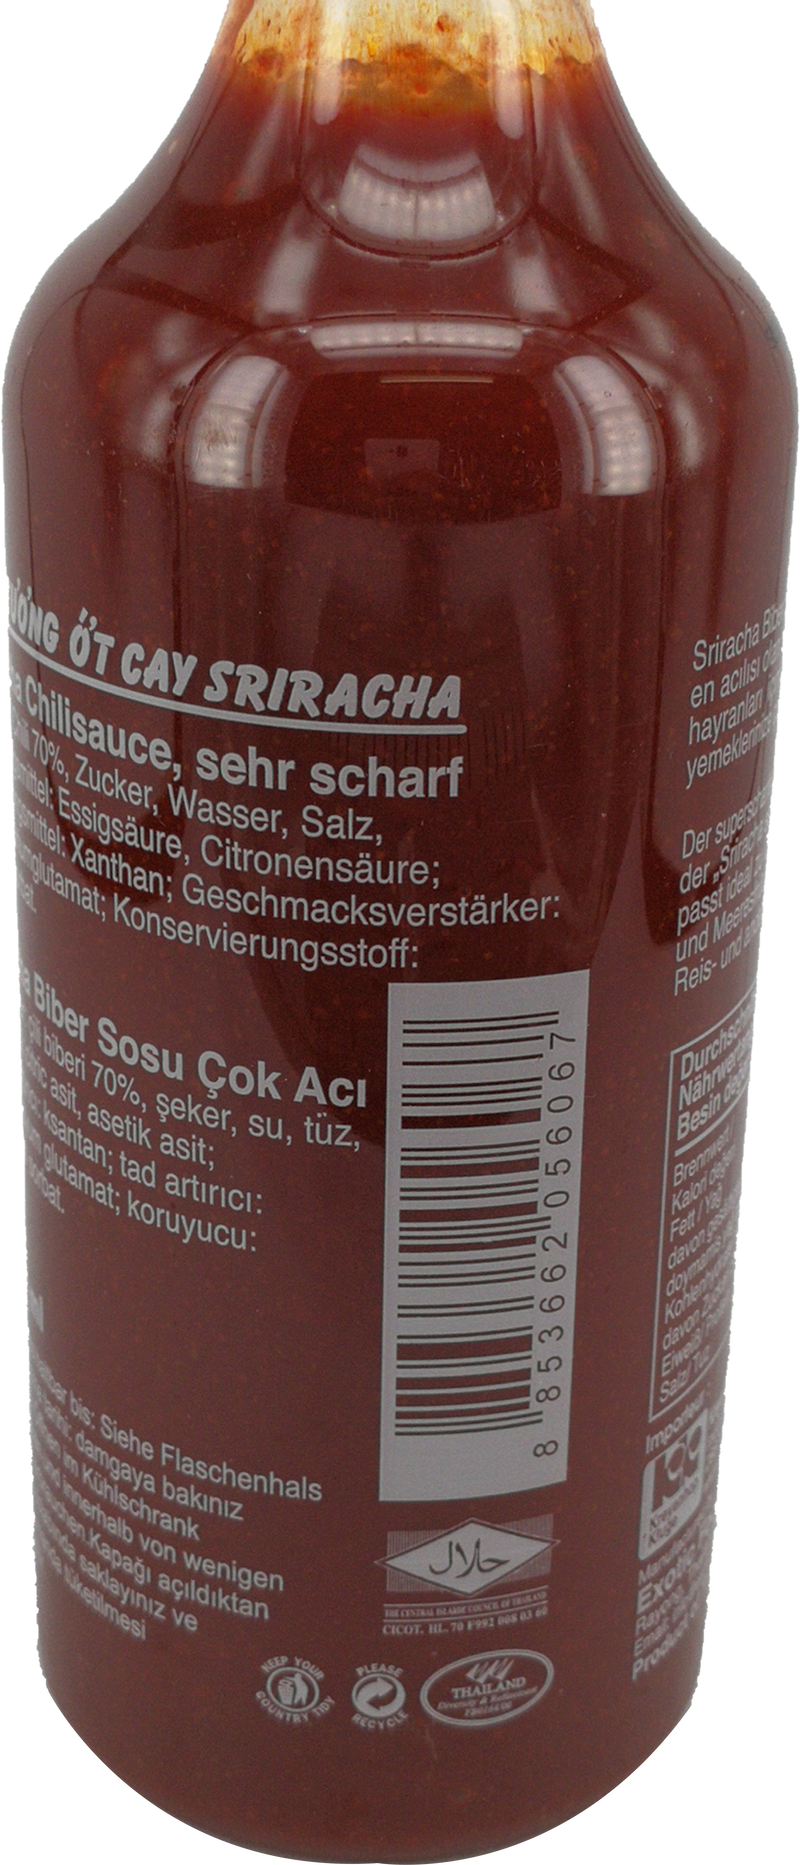 飞鹅 辣椒酱 特辣/Sriracha sehr Scharfe Chilisauce 455ml